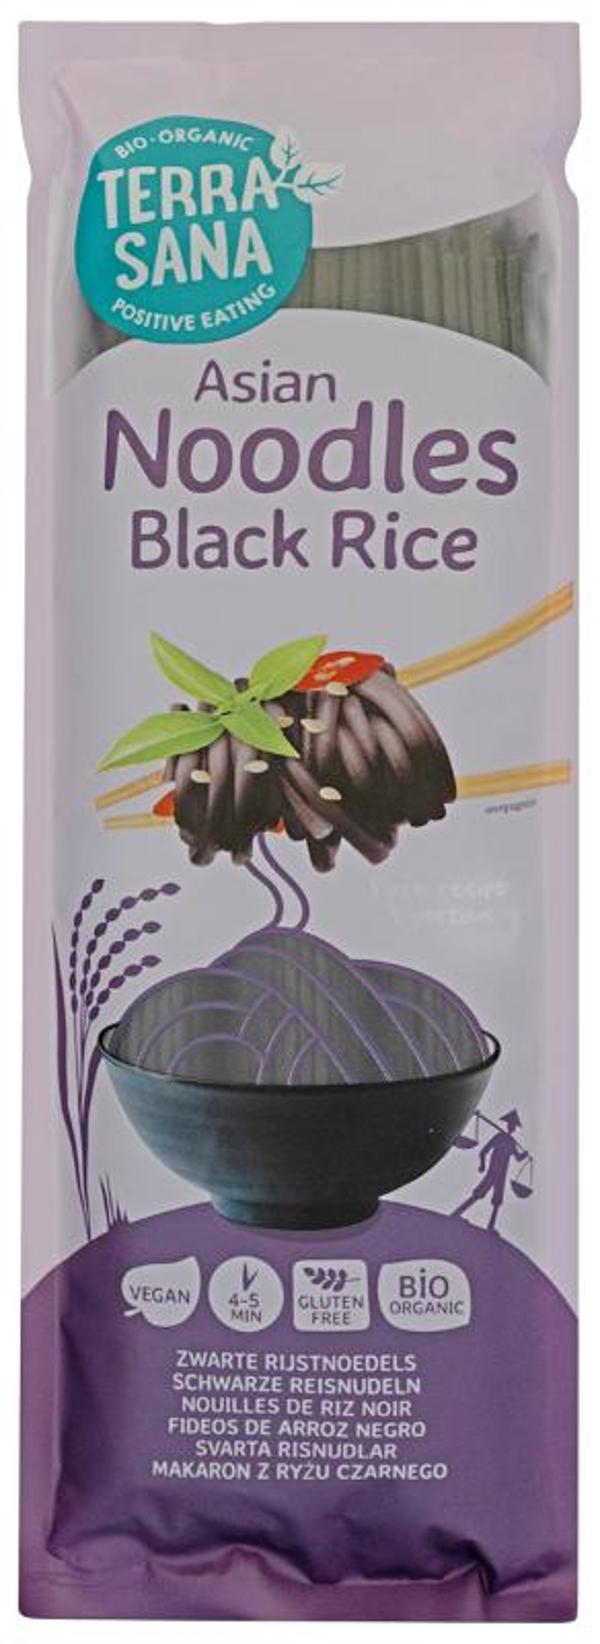 Produktfoto zu Schwarze Reisnudeln , 250 g